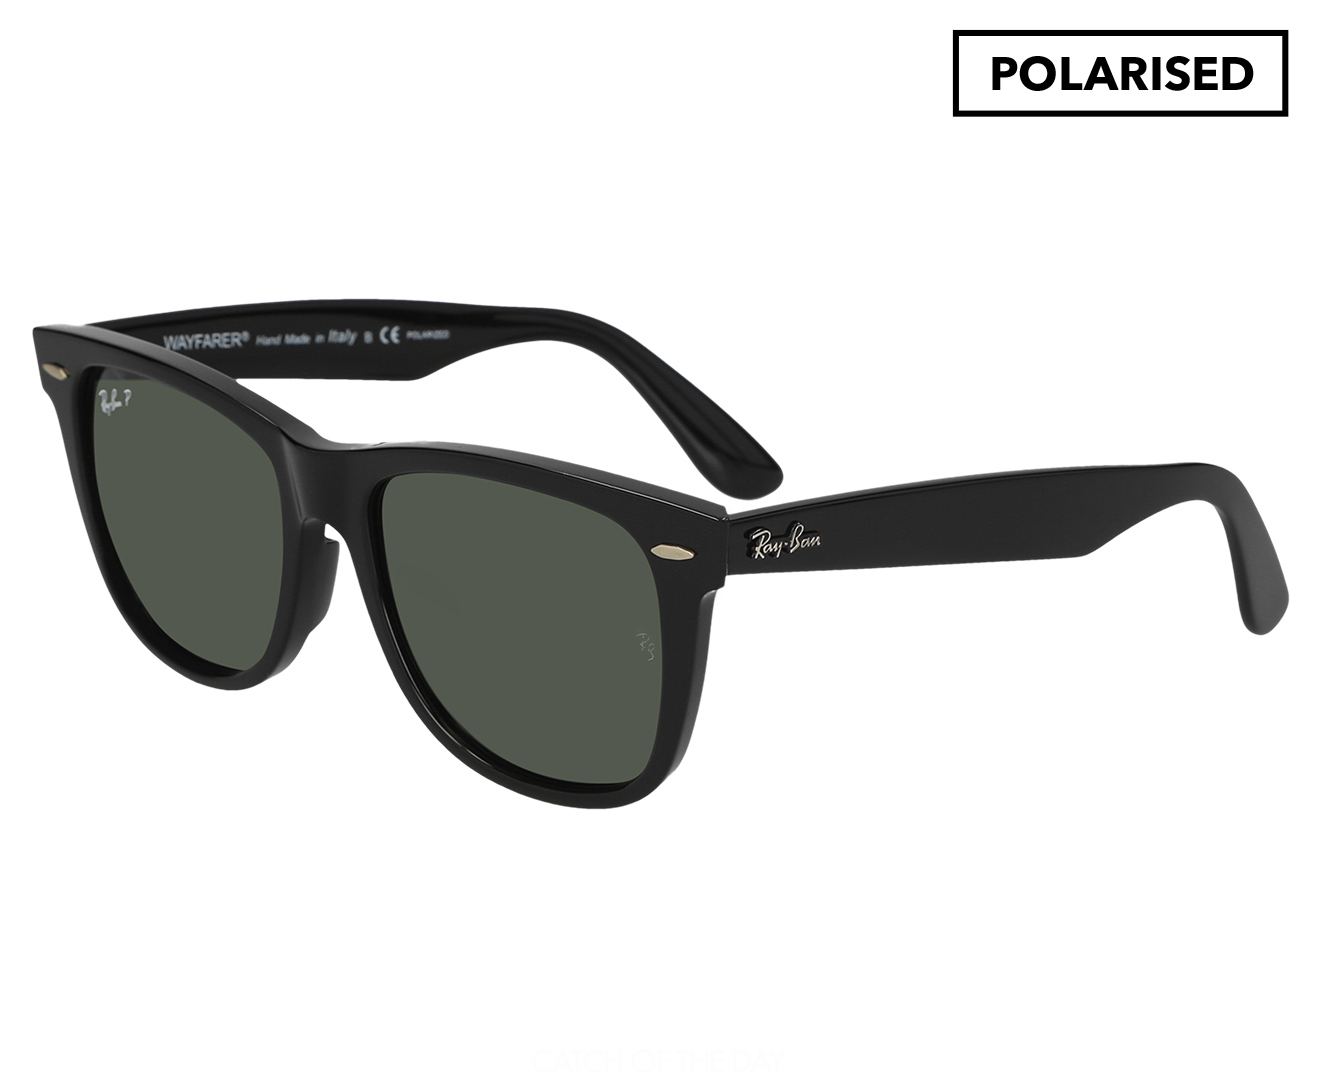 Discover more than 158 polarised wayfarer sunglasses super hot